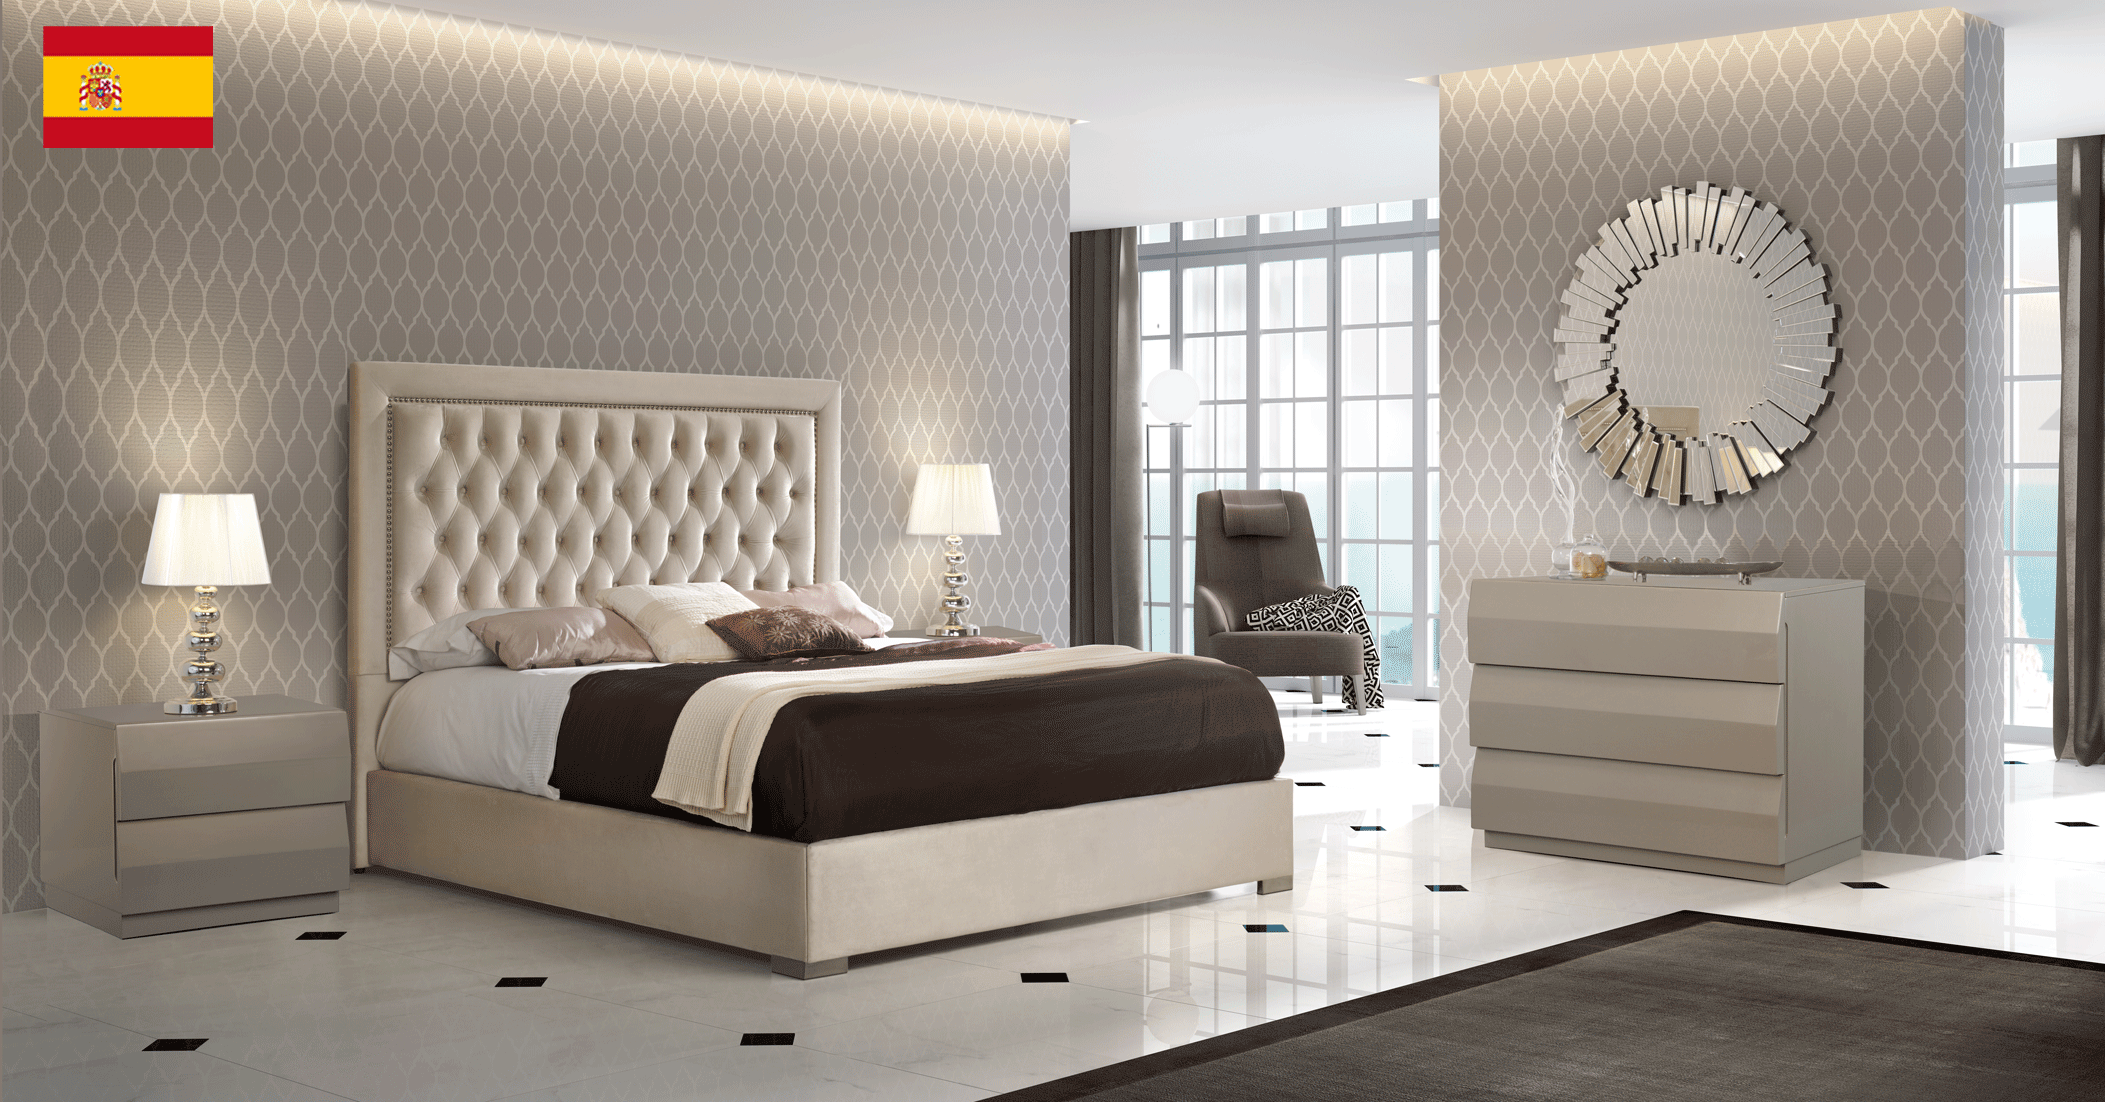 Bedroom Furniture Beds with storage Adagio Bedroom w/Storage, M152, C152, E100